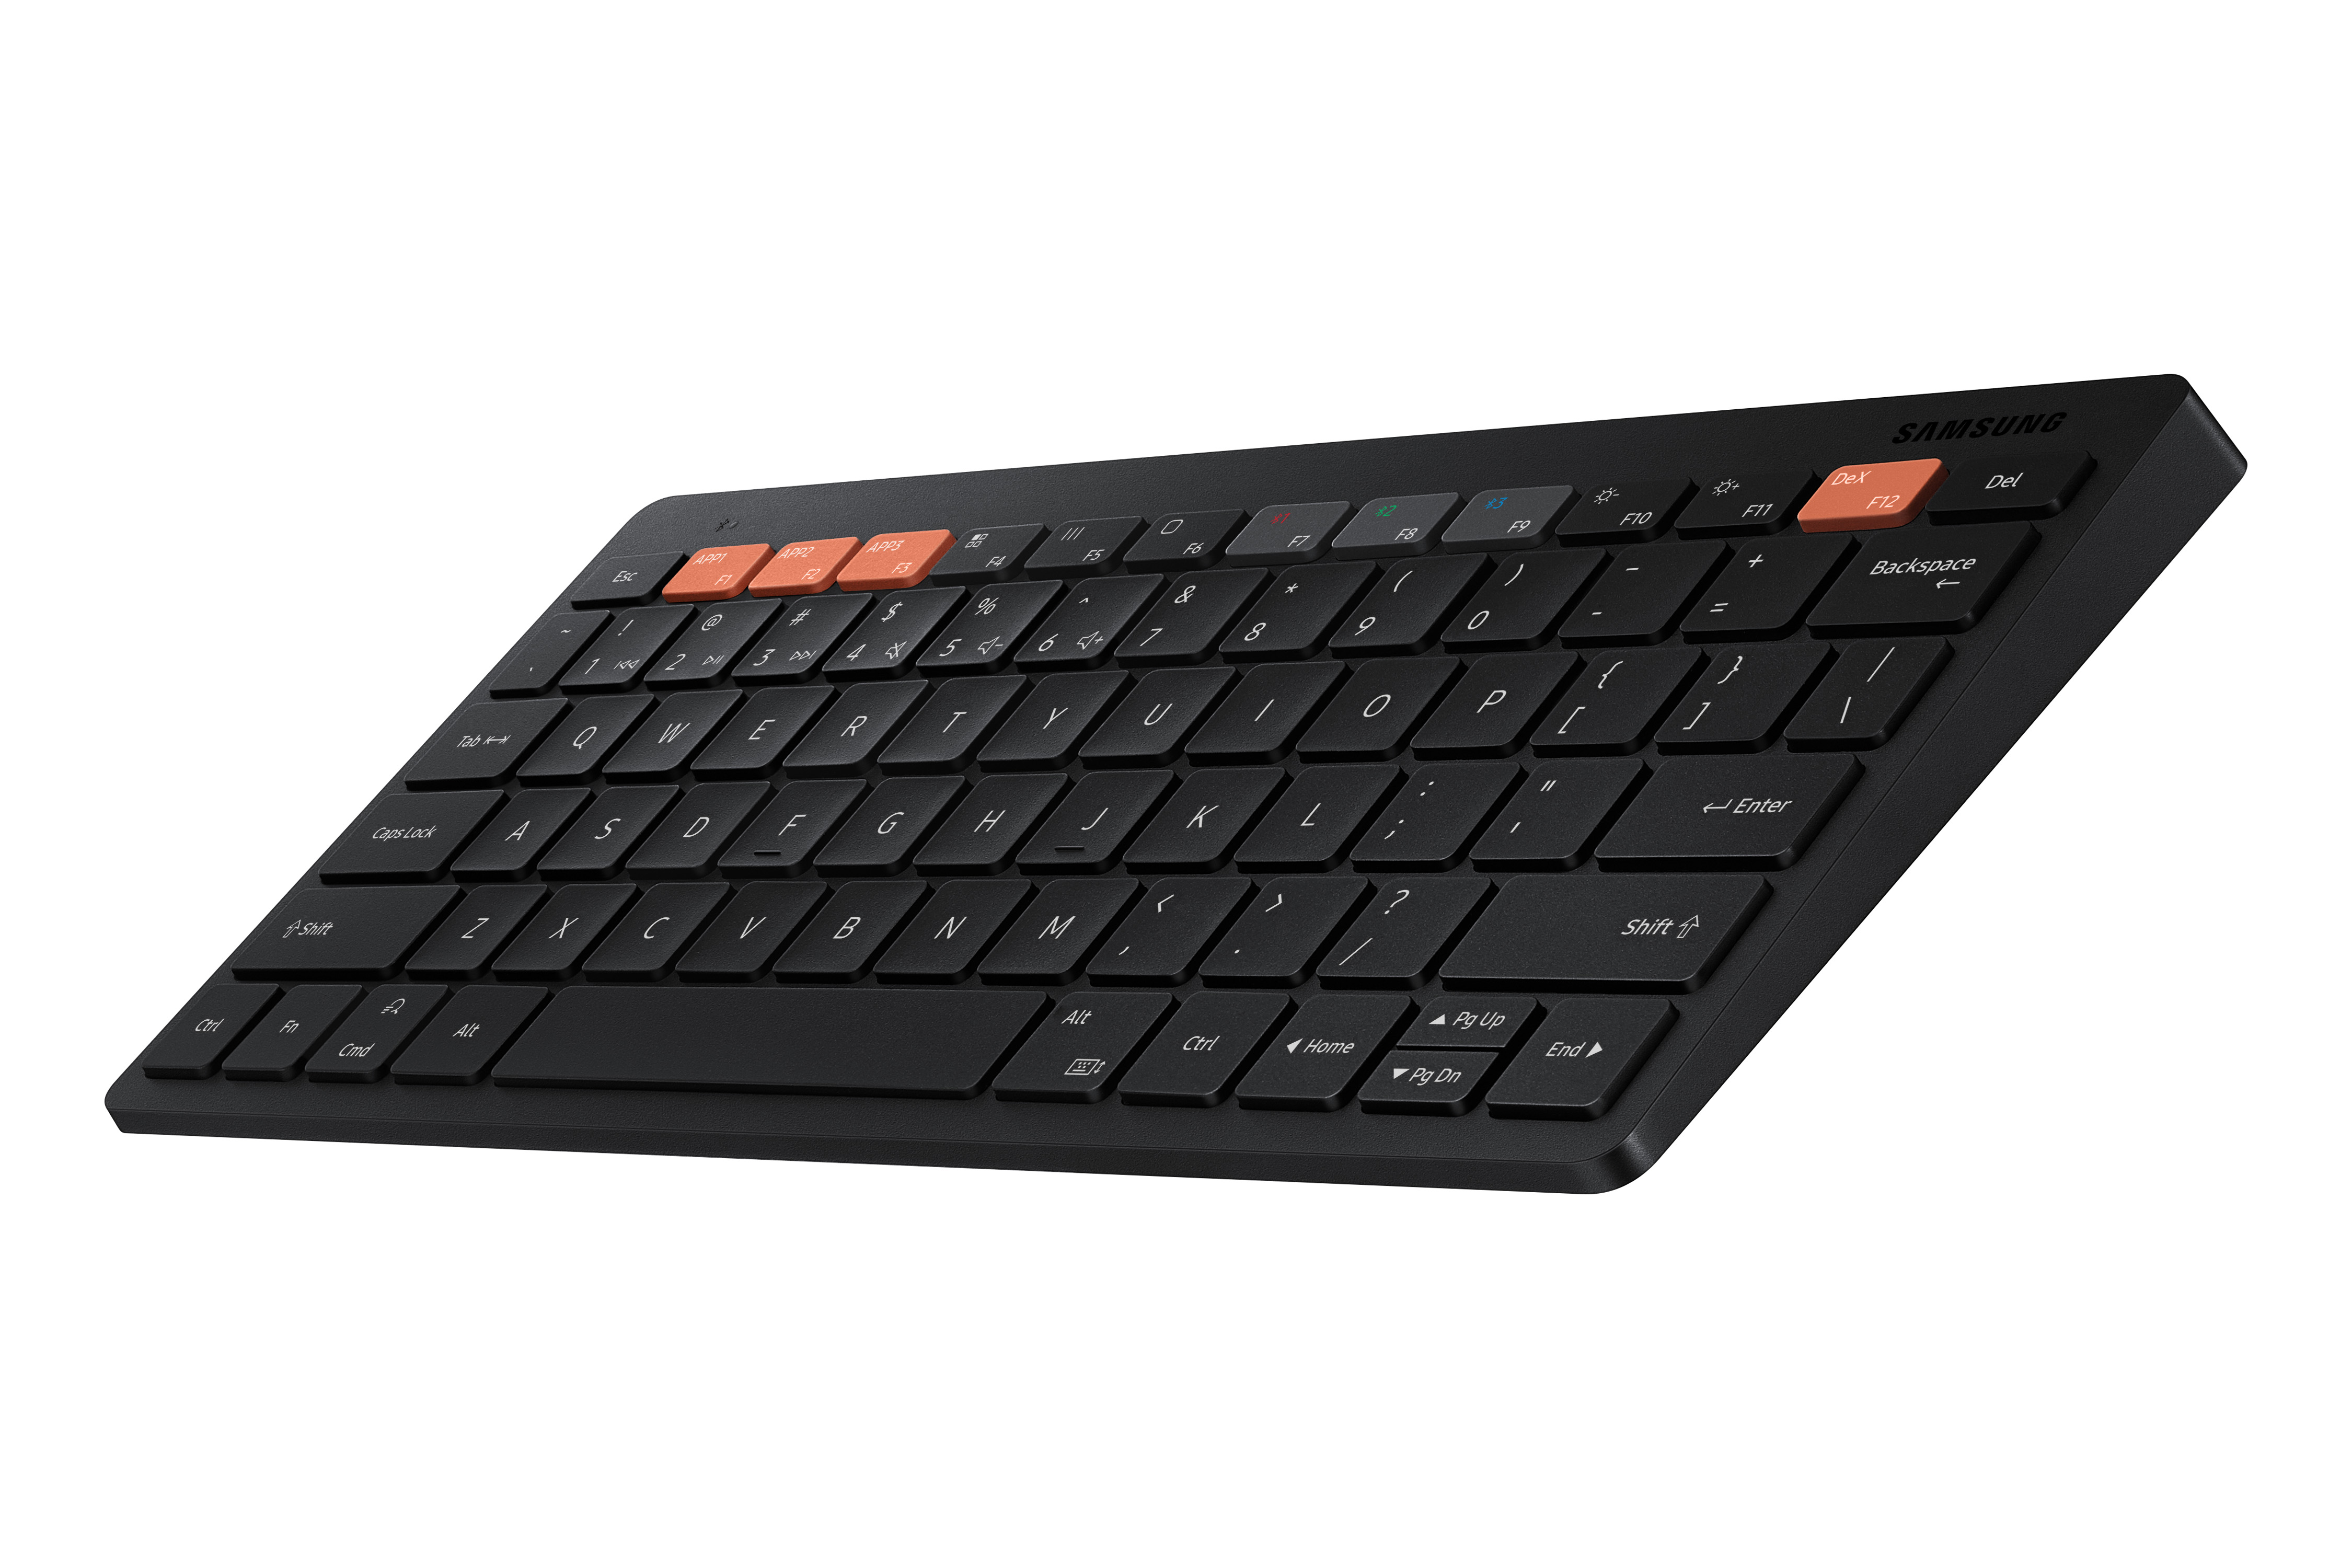 Smart Keyboard Trio 500, Black Mobile Accessories - EJ-B3400UBEGUS | Samsung  US